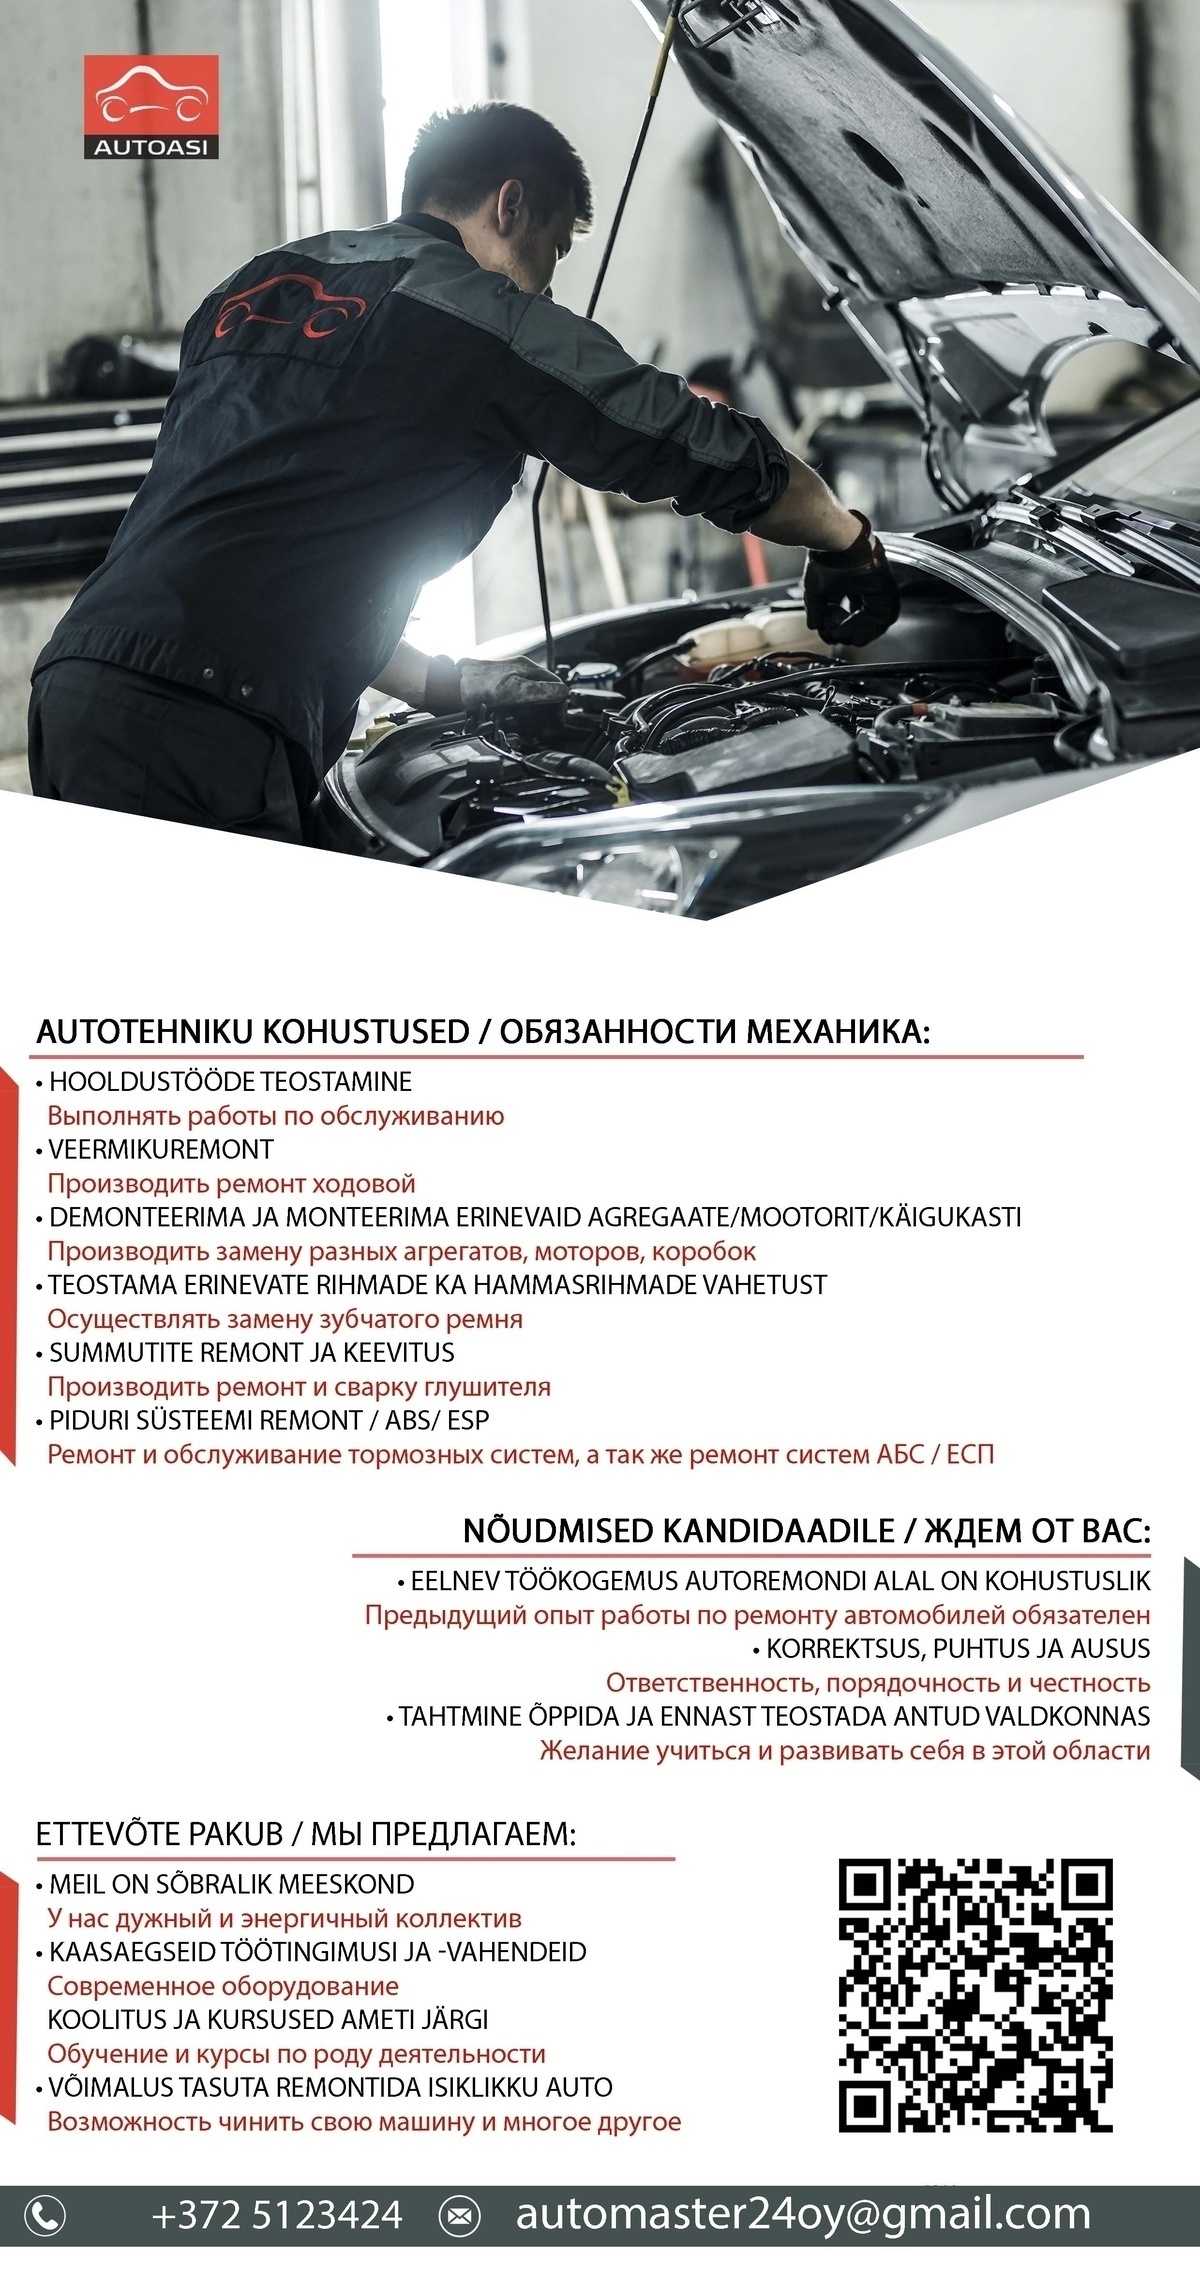 Automaster24 OÜ Autotehnik, Автотехник - механик